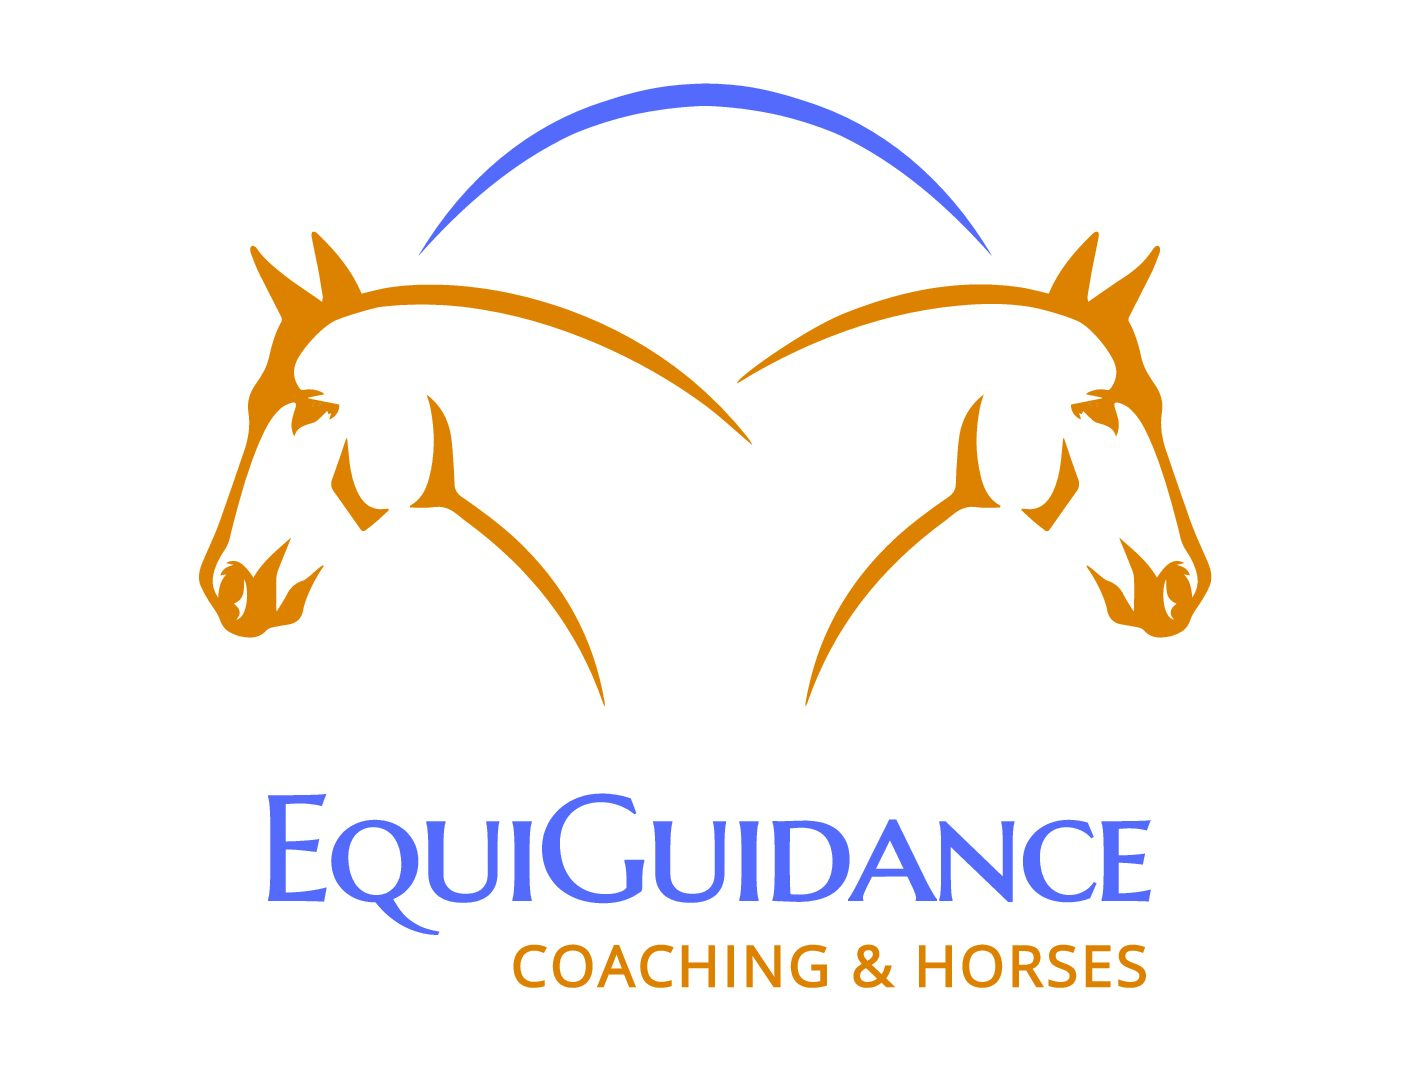 EquiGuidance, Coaching & Horses